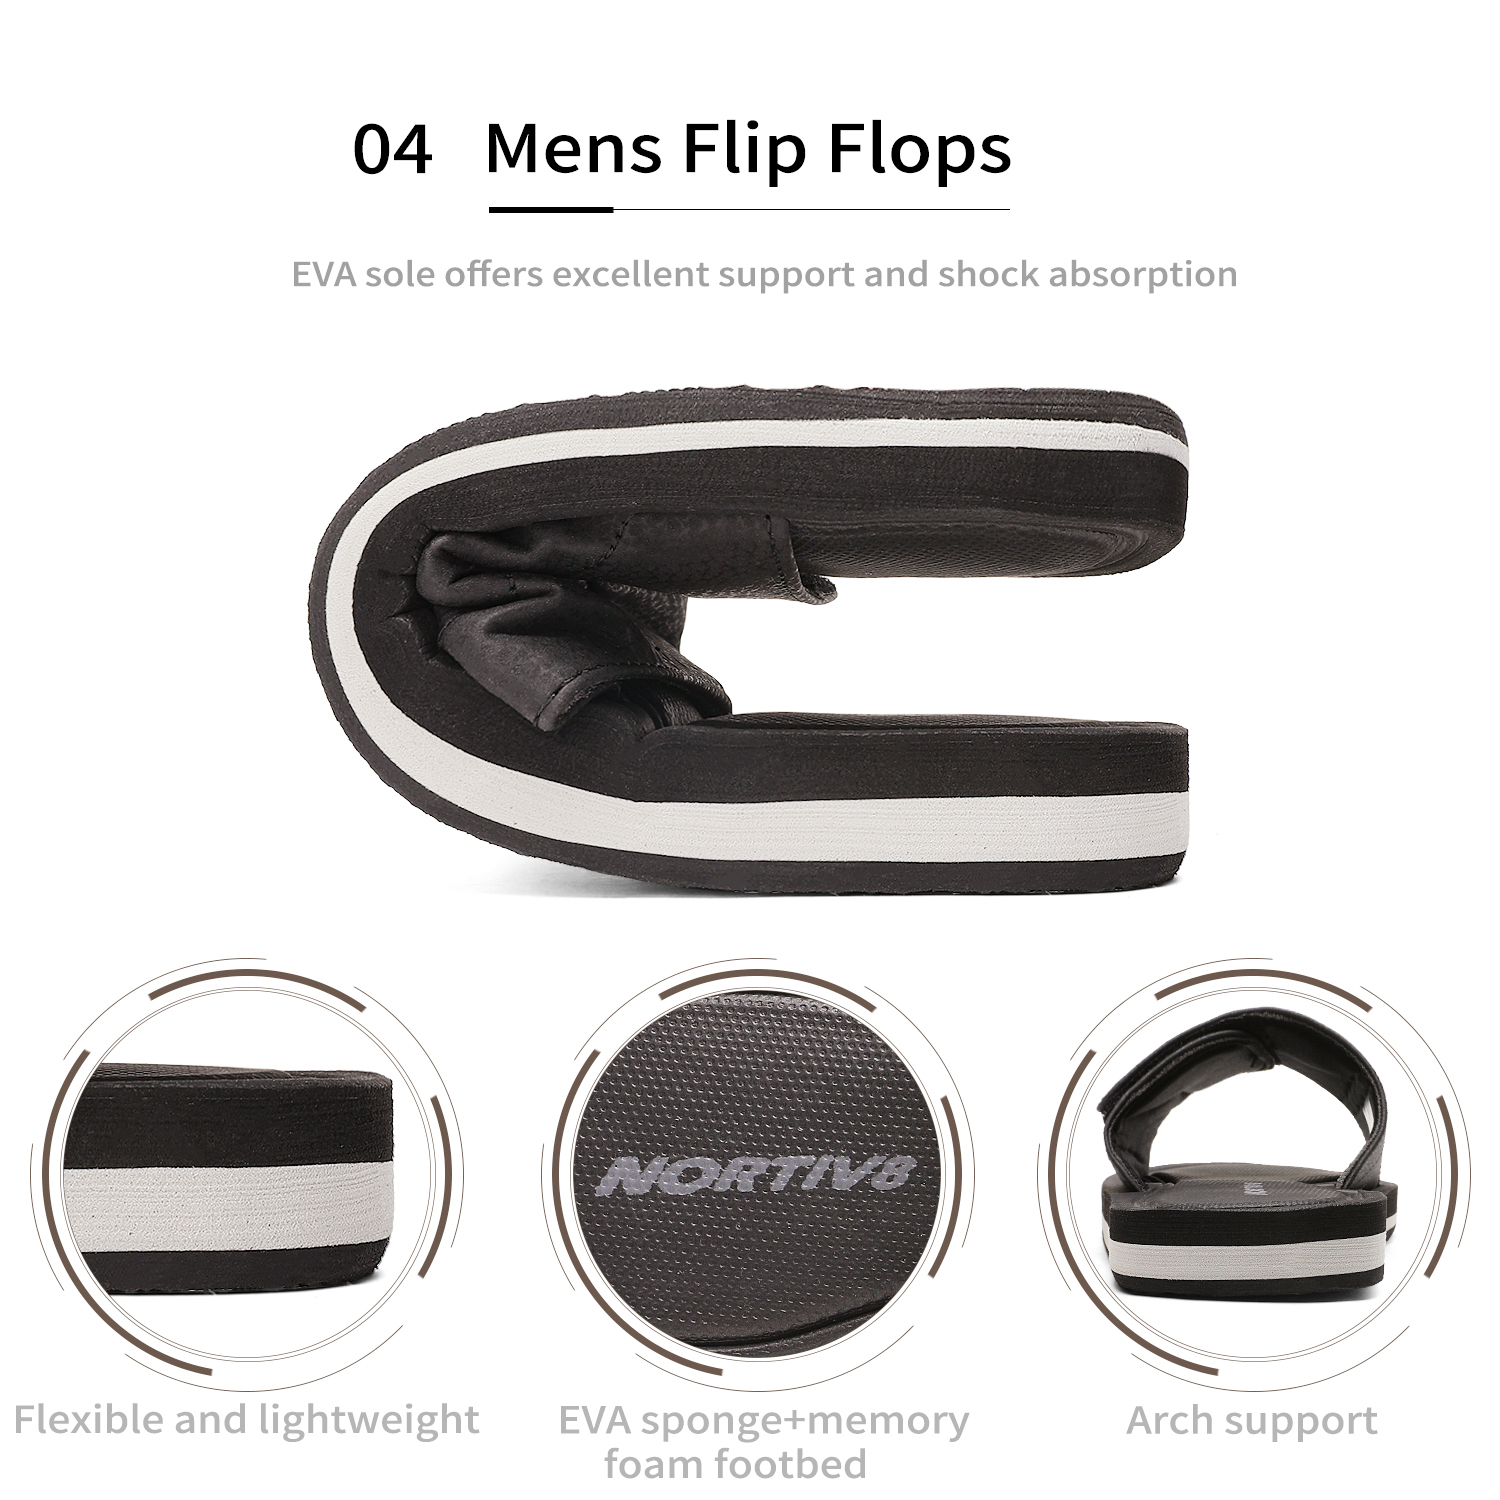 Nortiv 8 Men's Memory Foam Adjustable Slide Sandals Comfort Lightweight Beach Shoes Summer Outdoor Slipper Fusion Black Size 14 - image 2 of 5